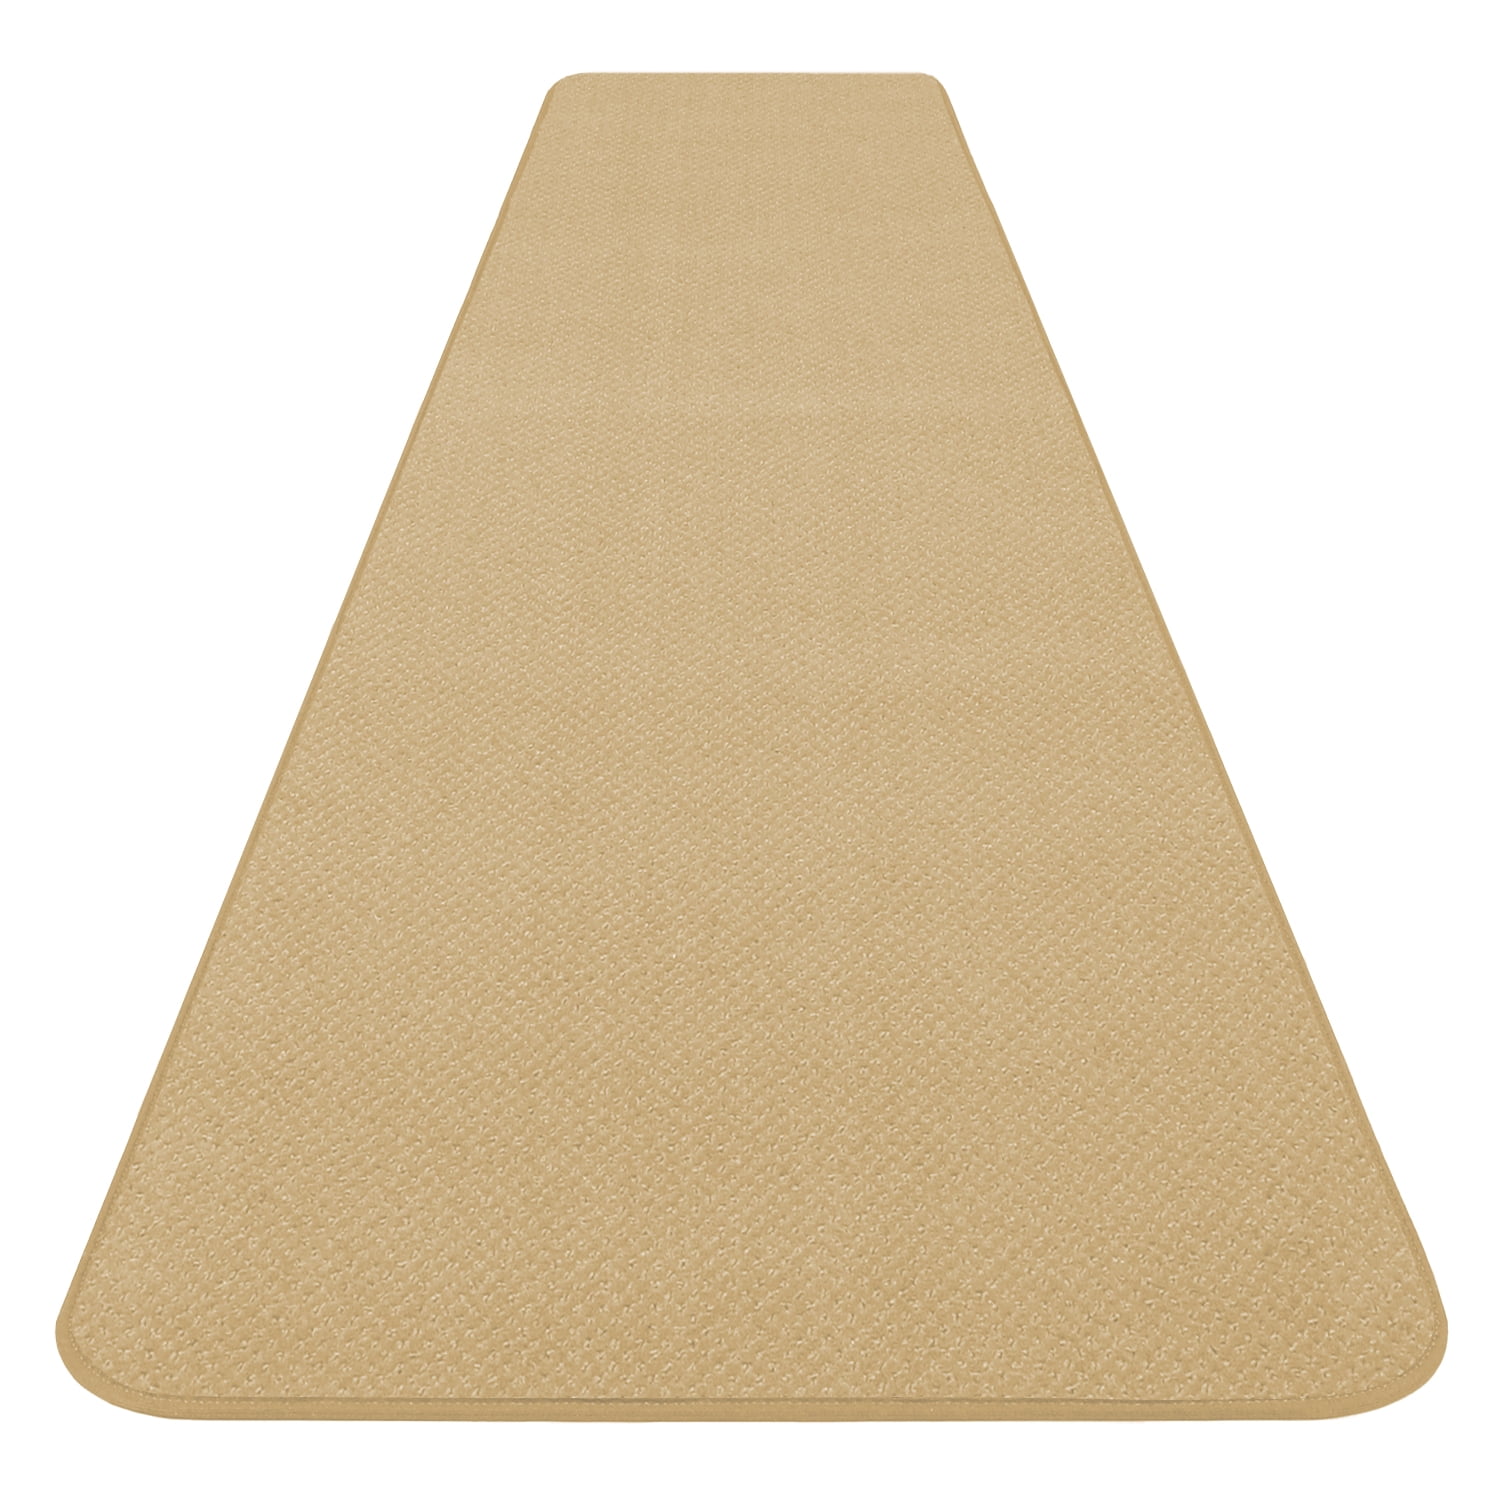 6 FT X 36 in Skid-resistant Carpet Runner Praline Brown Hall Area Rug Floor Mat for sale online 